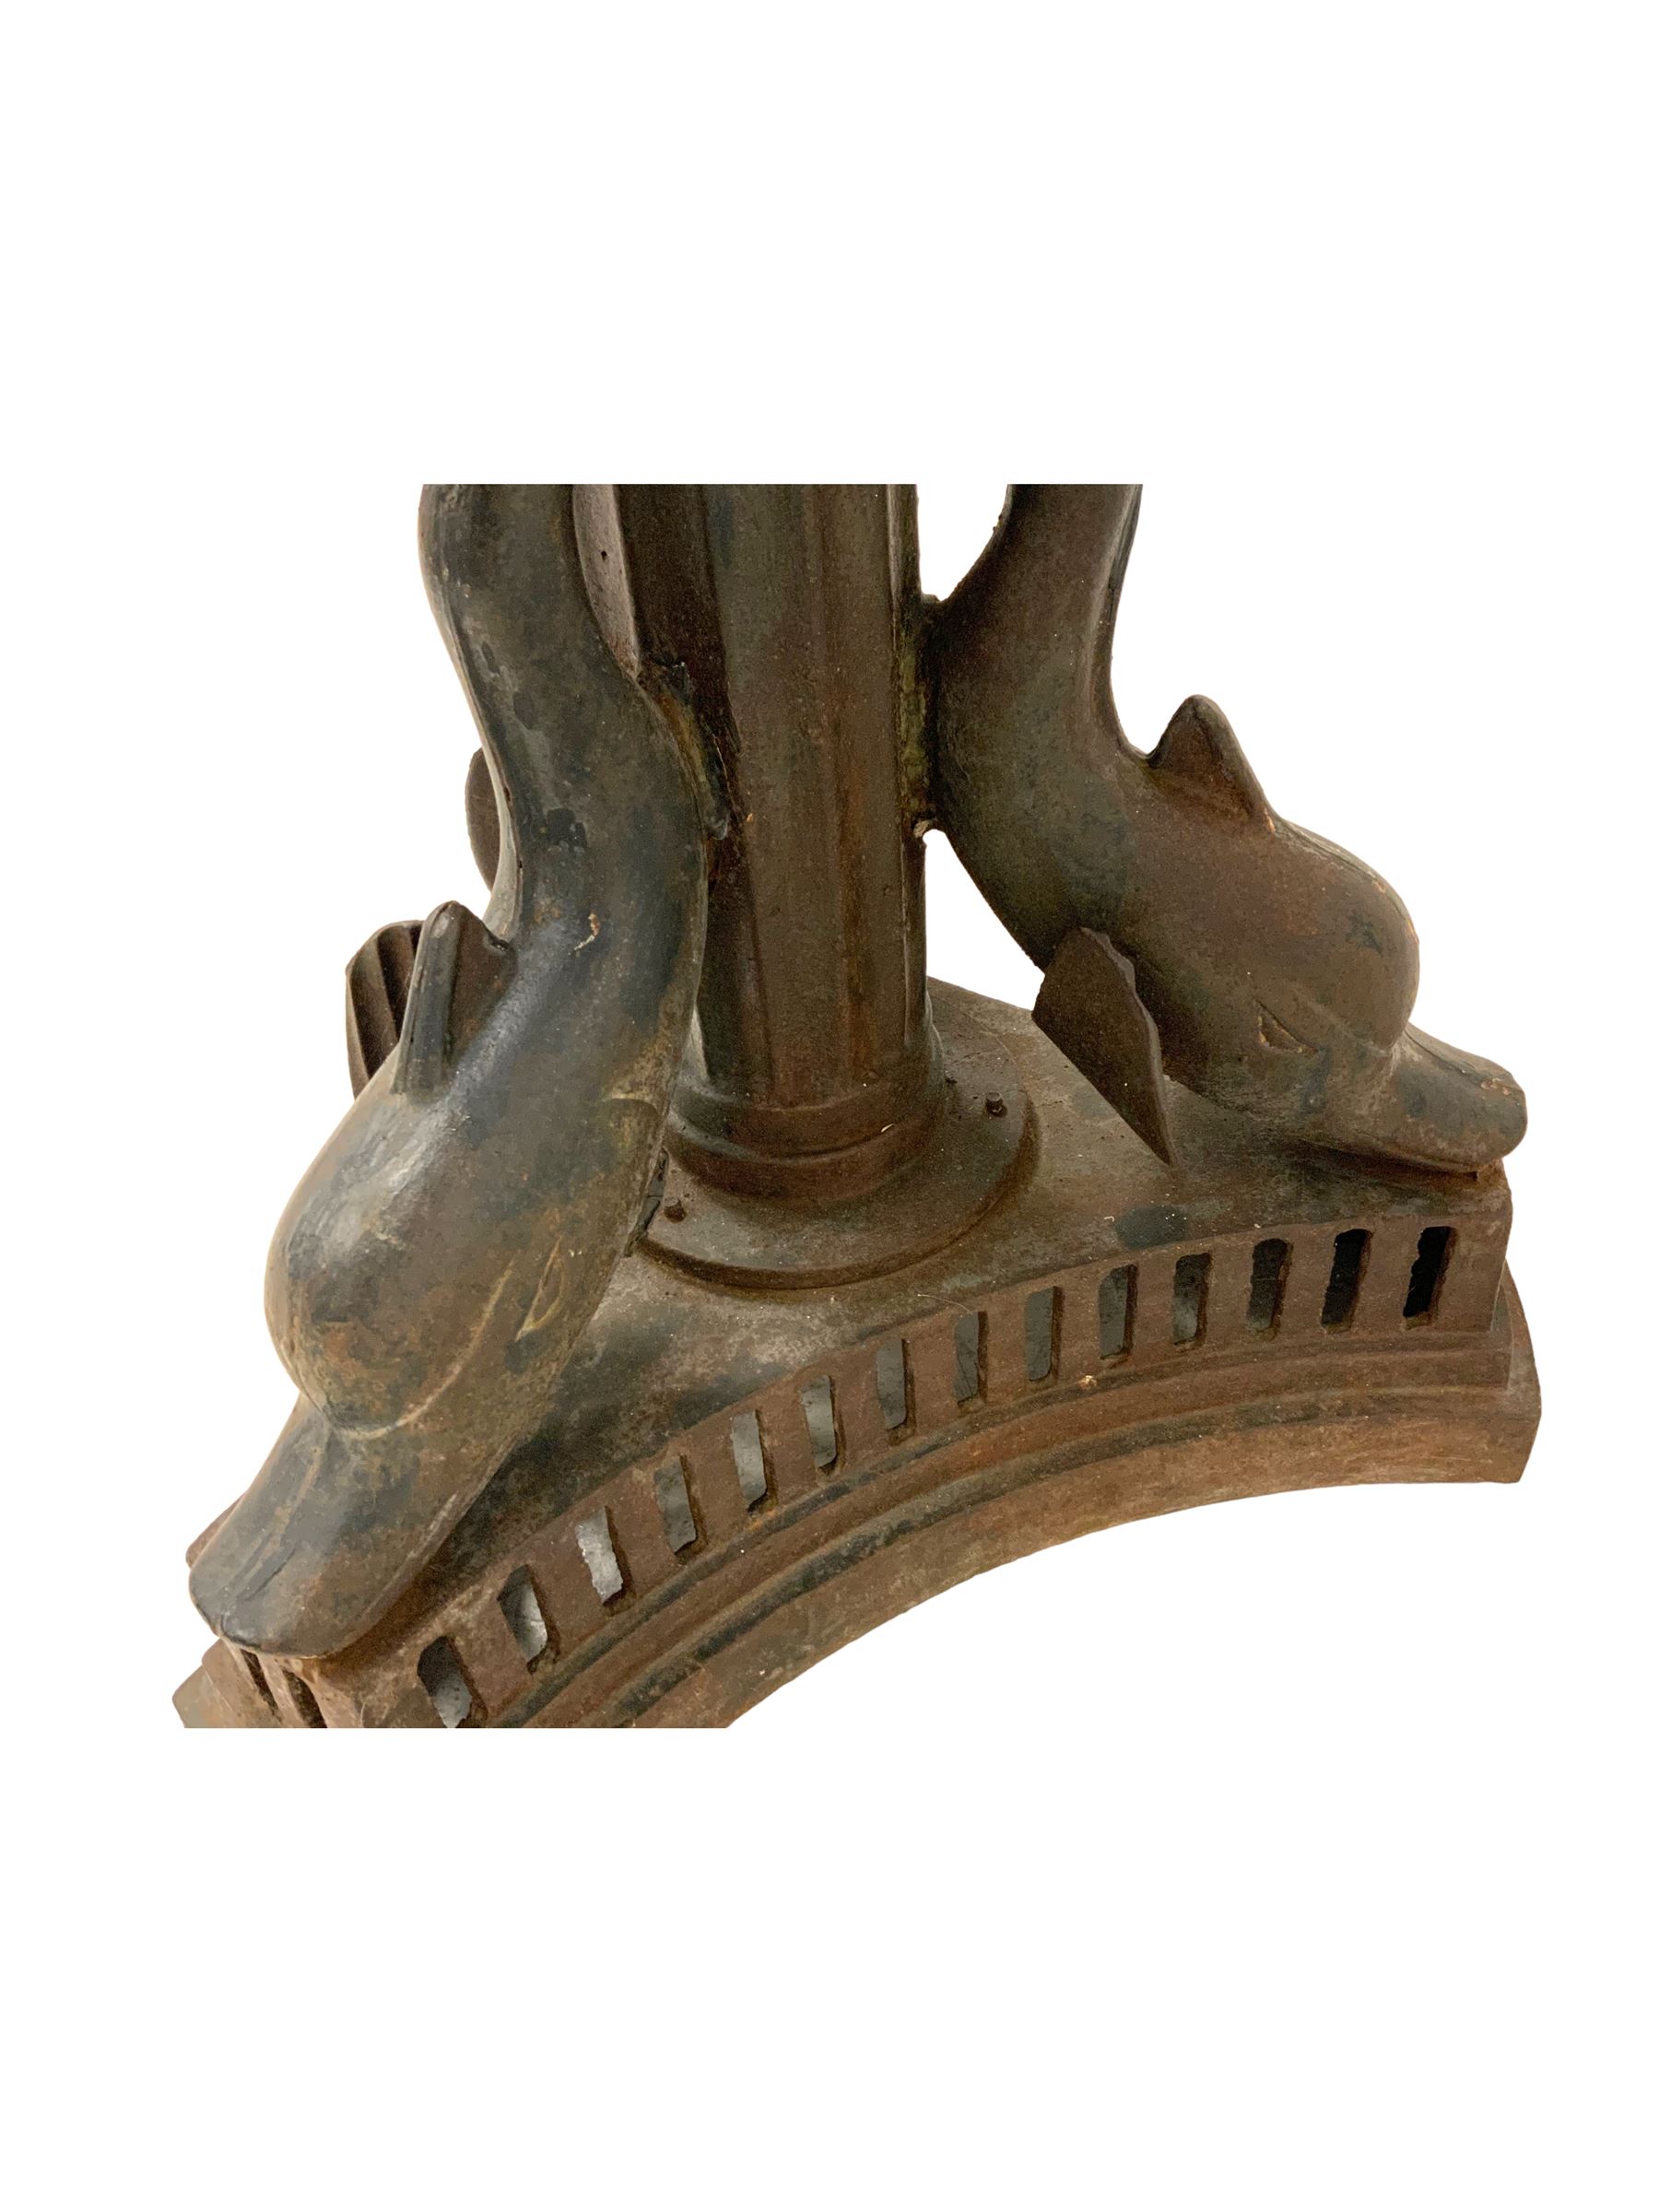 Mid-20th century classical revival cast iron birdbath - Image 7 of 8